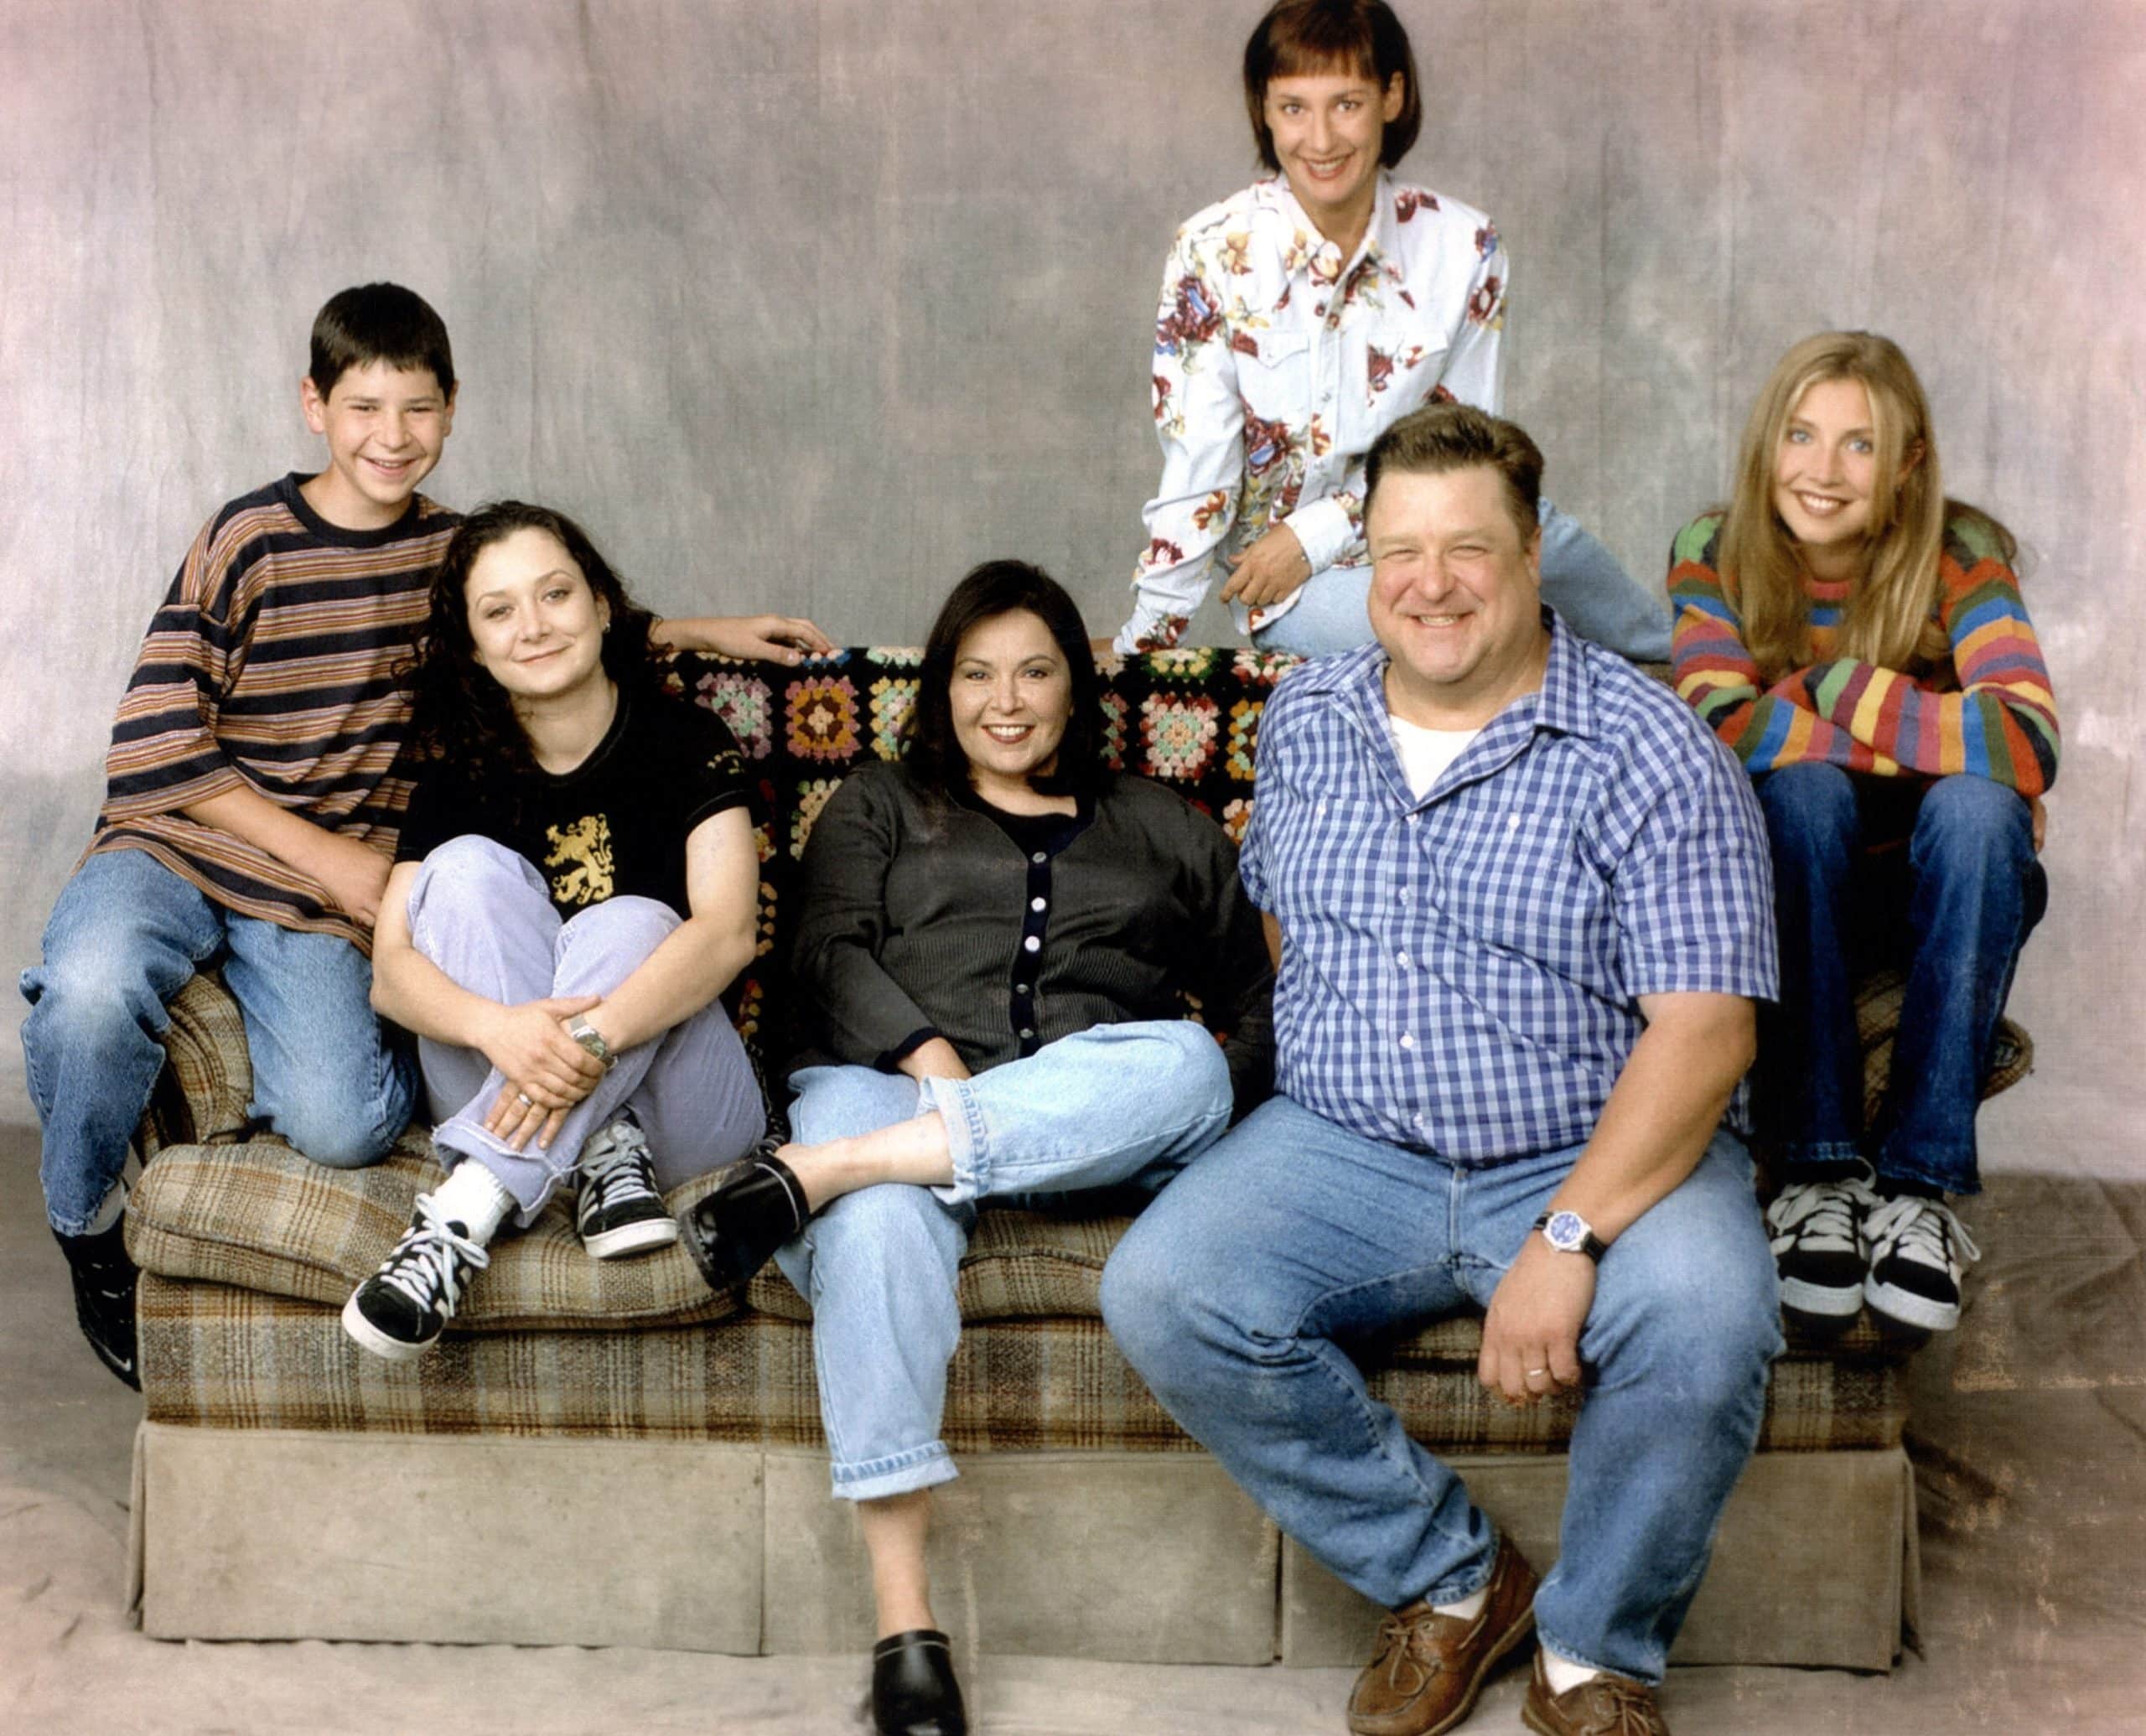 ROSEANNE, from left, Michael Fishman, Sara Gilbert, Roseanne Barr, Laurie Metcalf, John Goodman, Sarah Chalke, 1988-2018